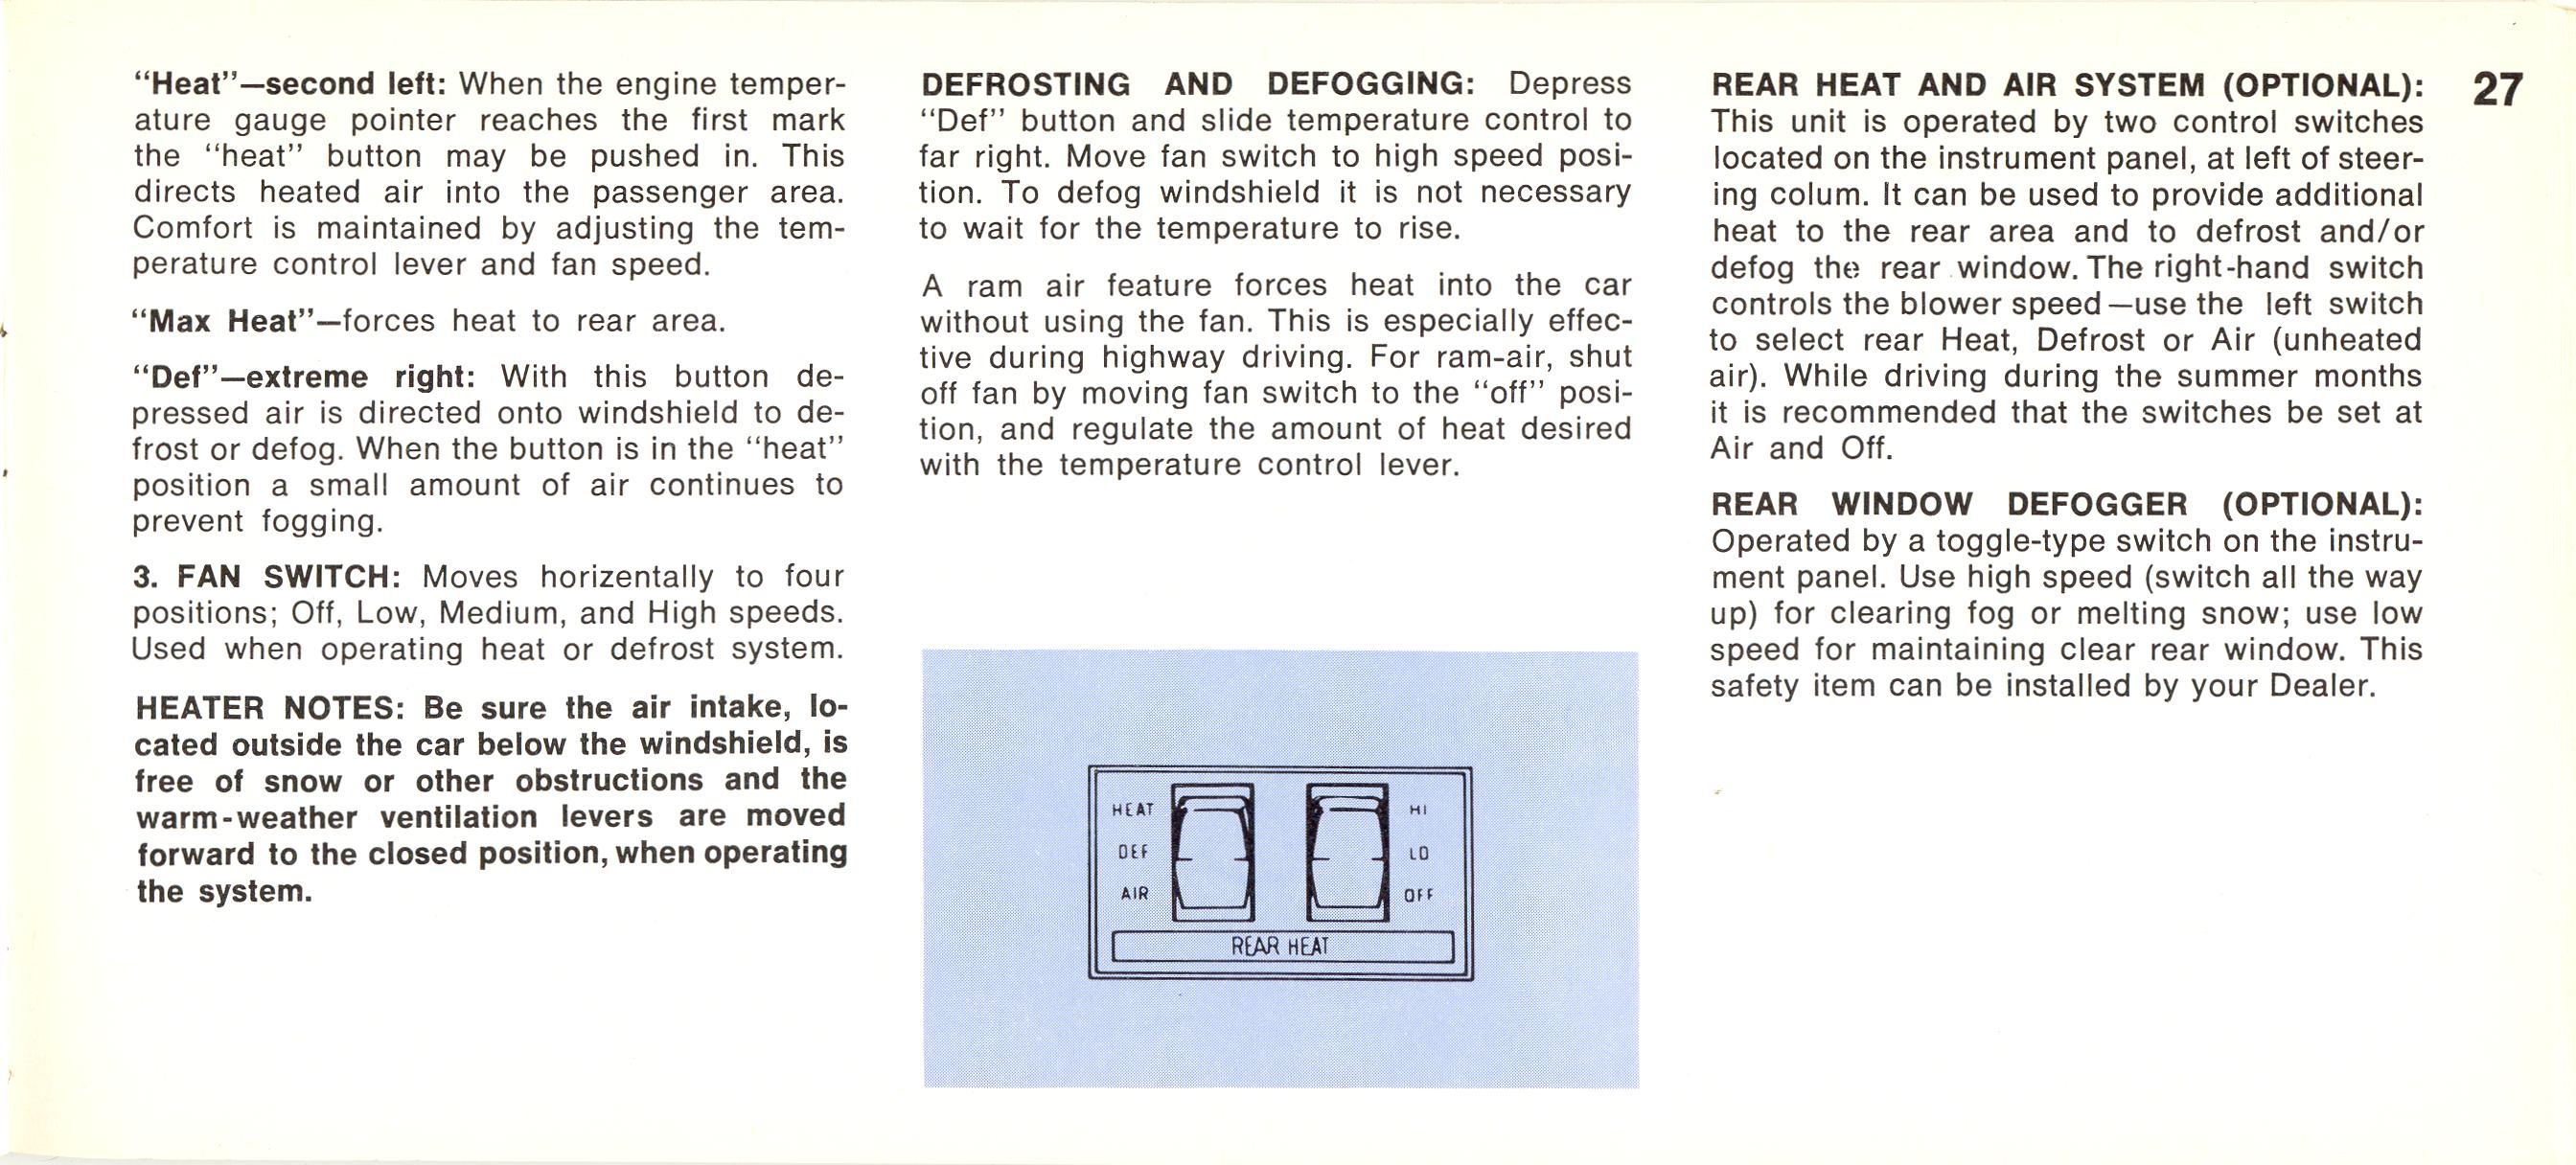 1968 Imperial Manual-27